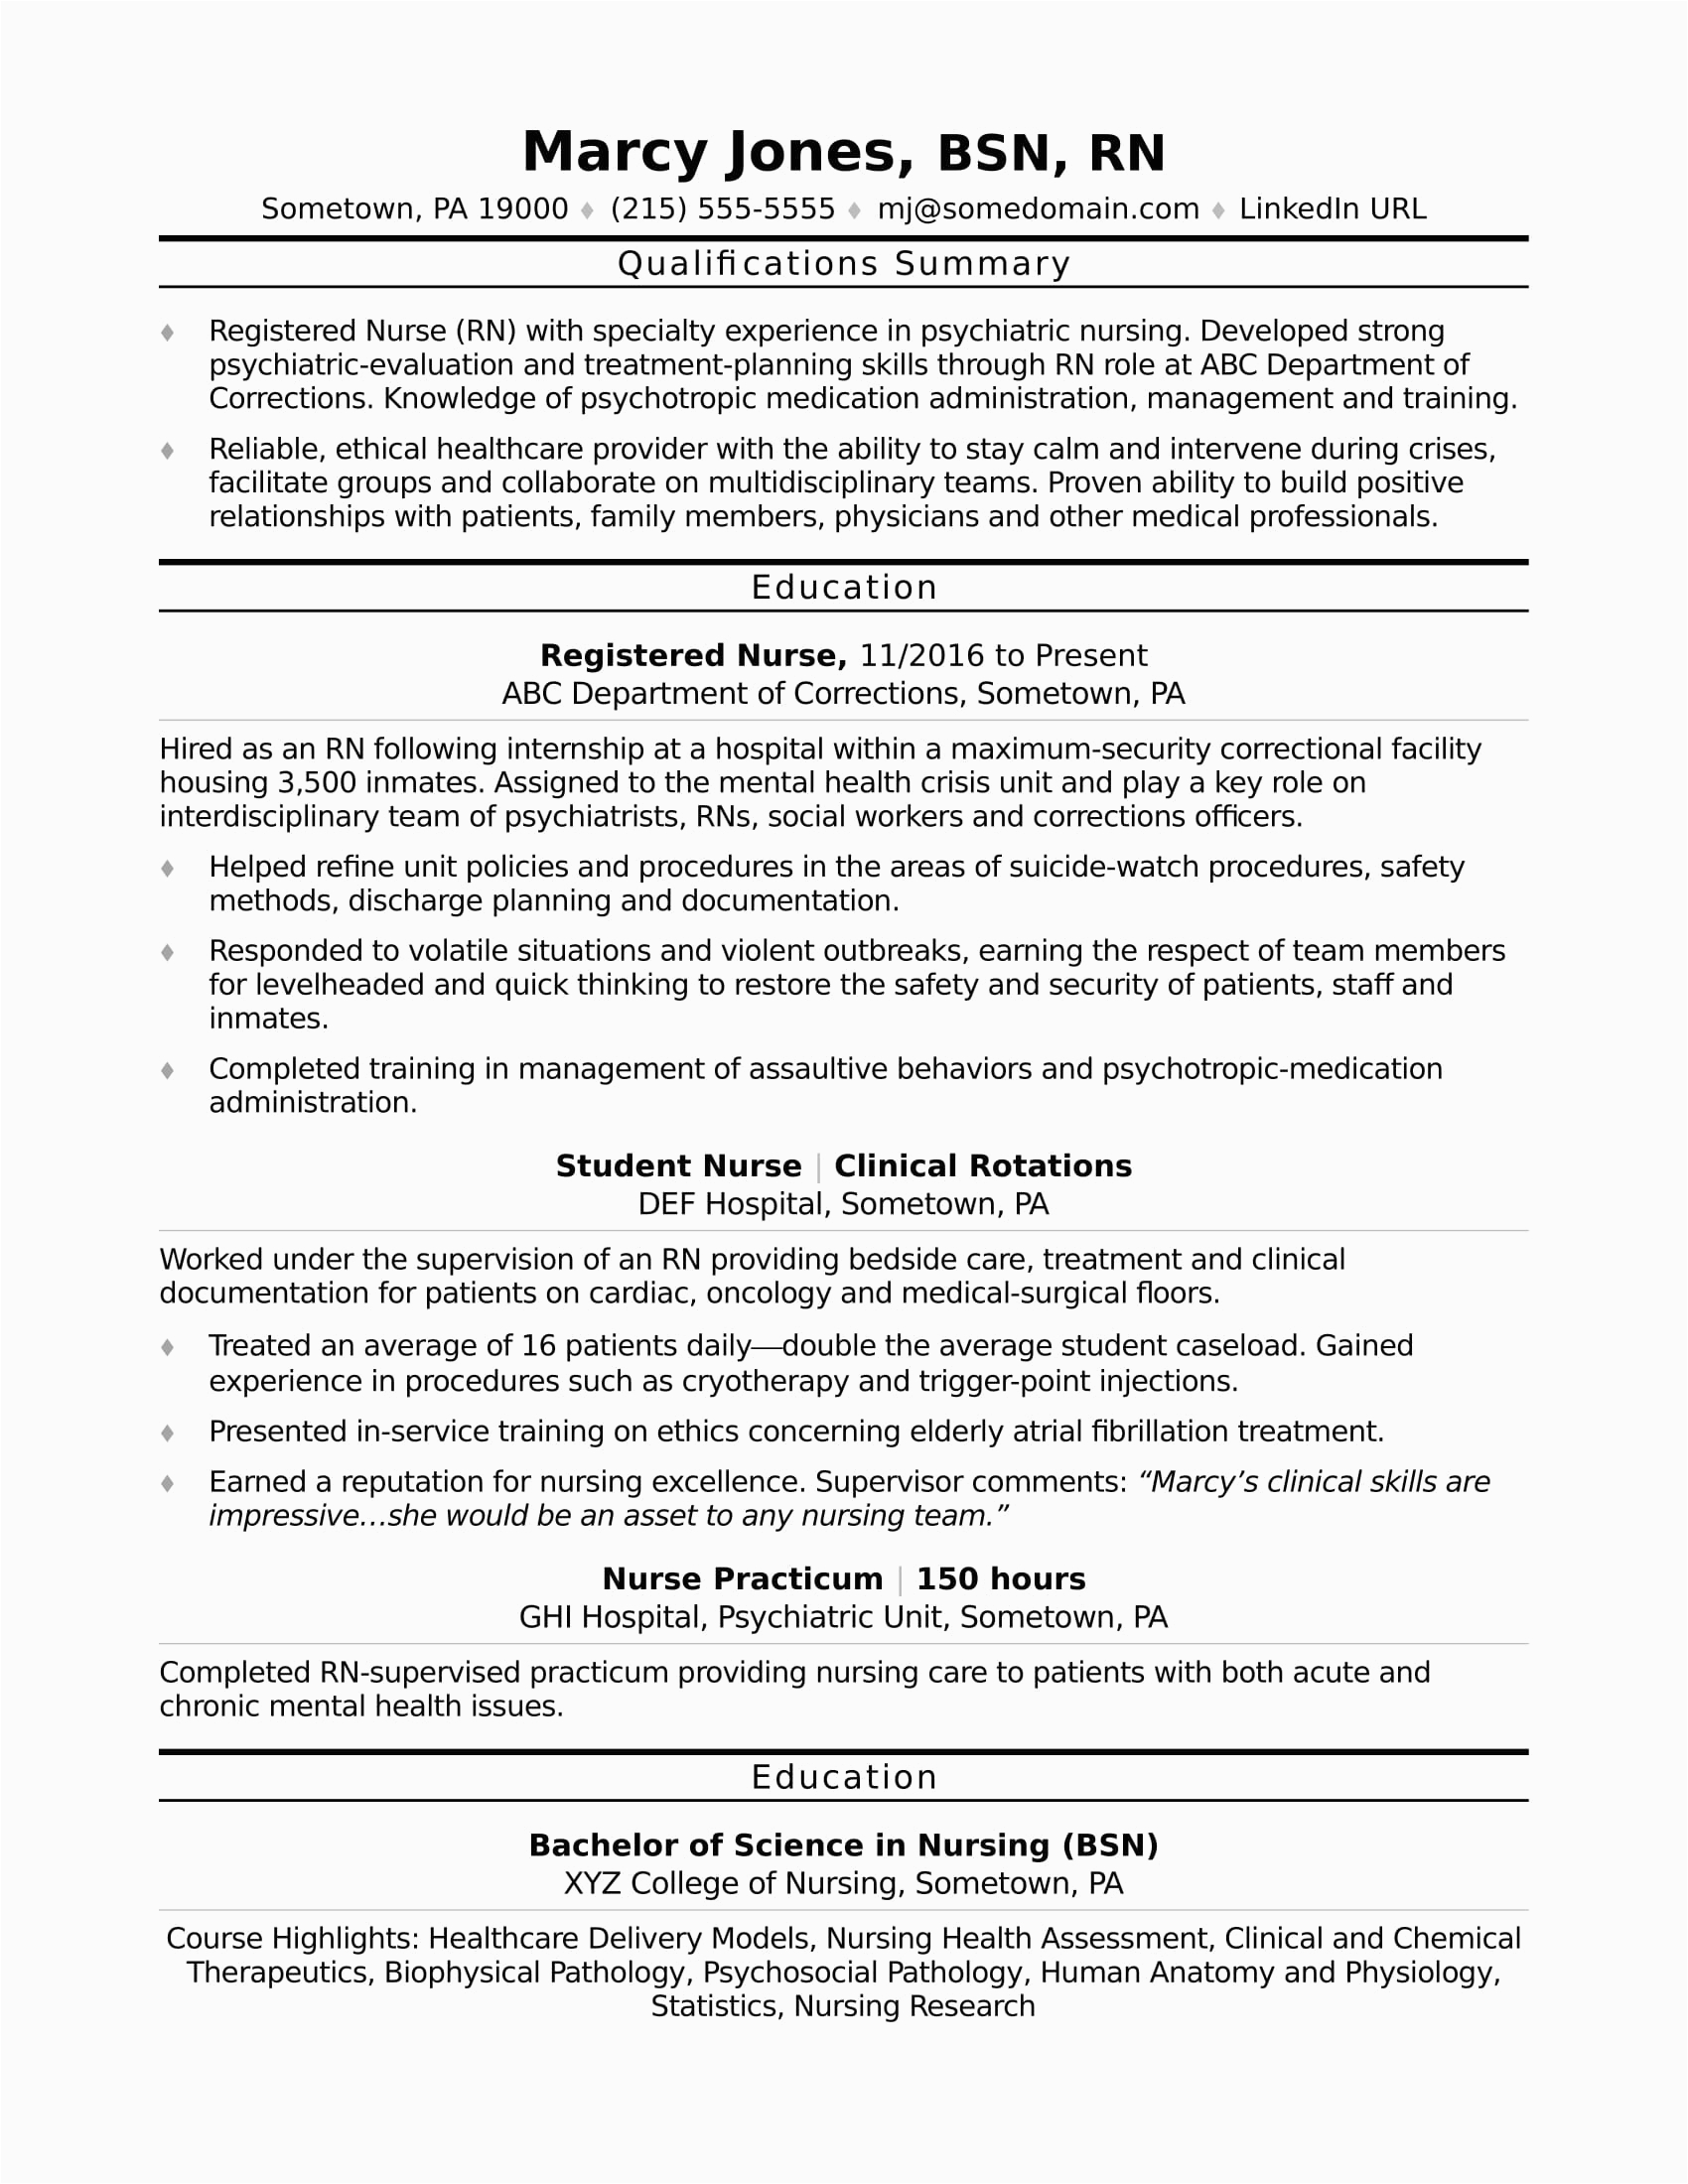 Sample Resume format for New Nurses Registered Nurse Rn Resume Sample